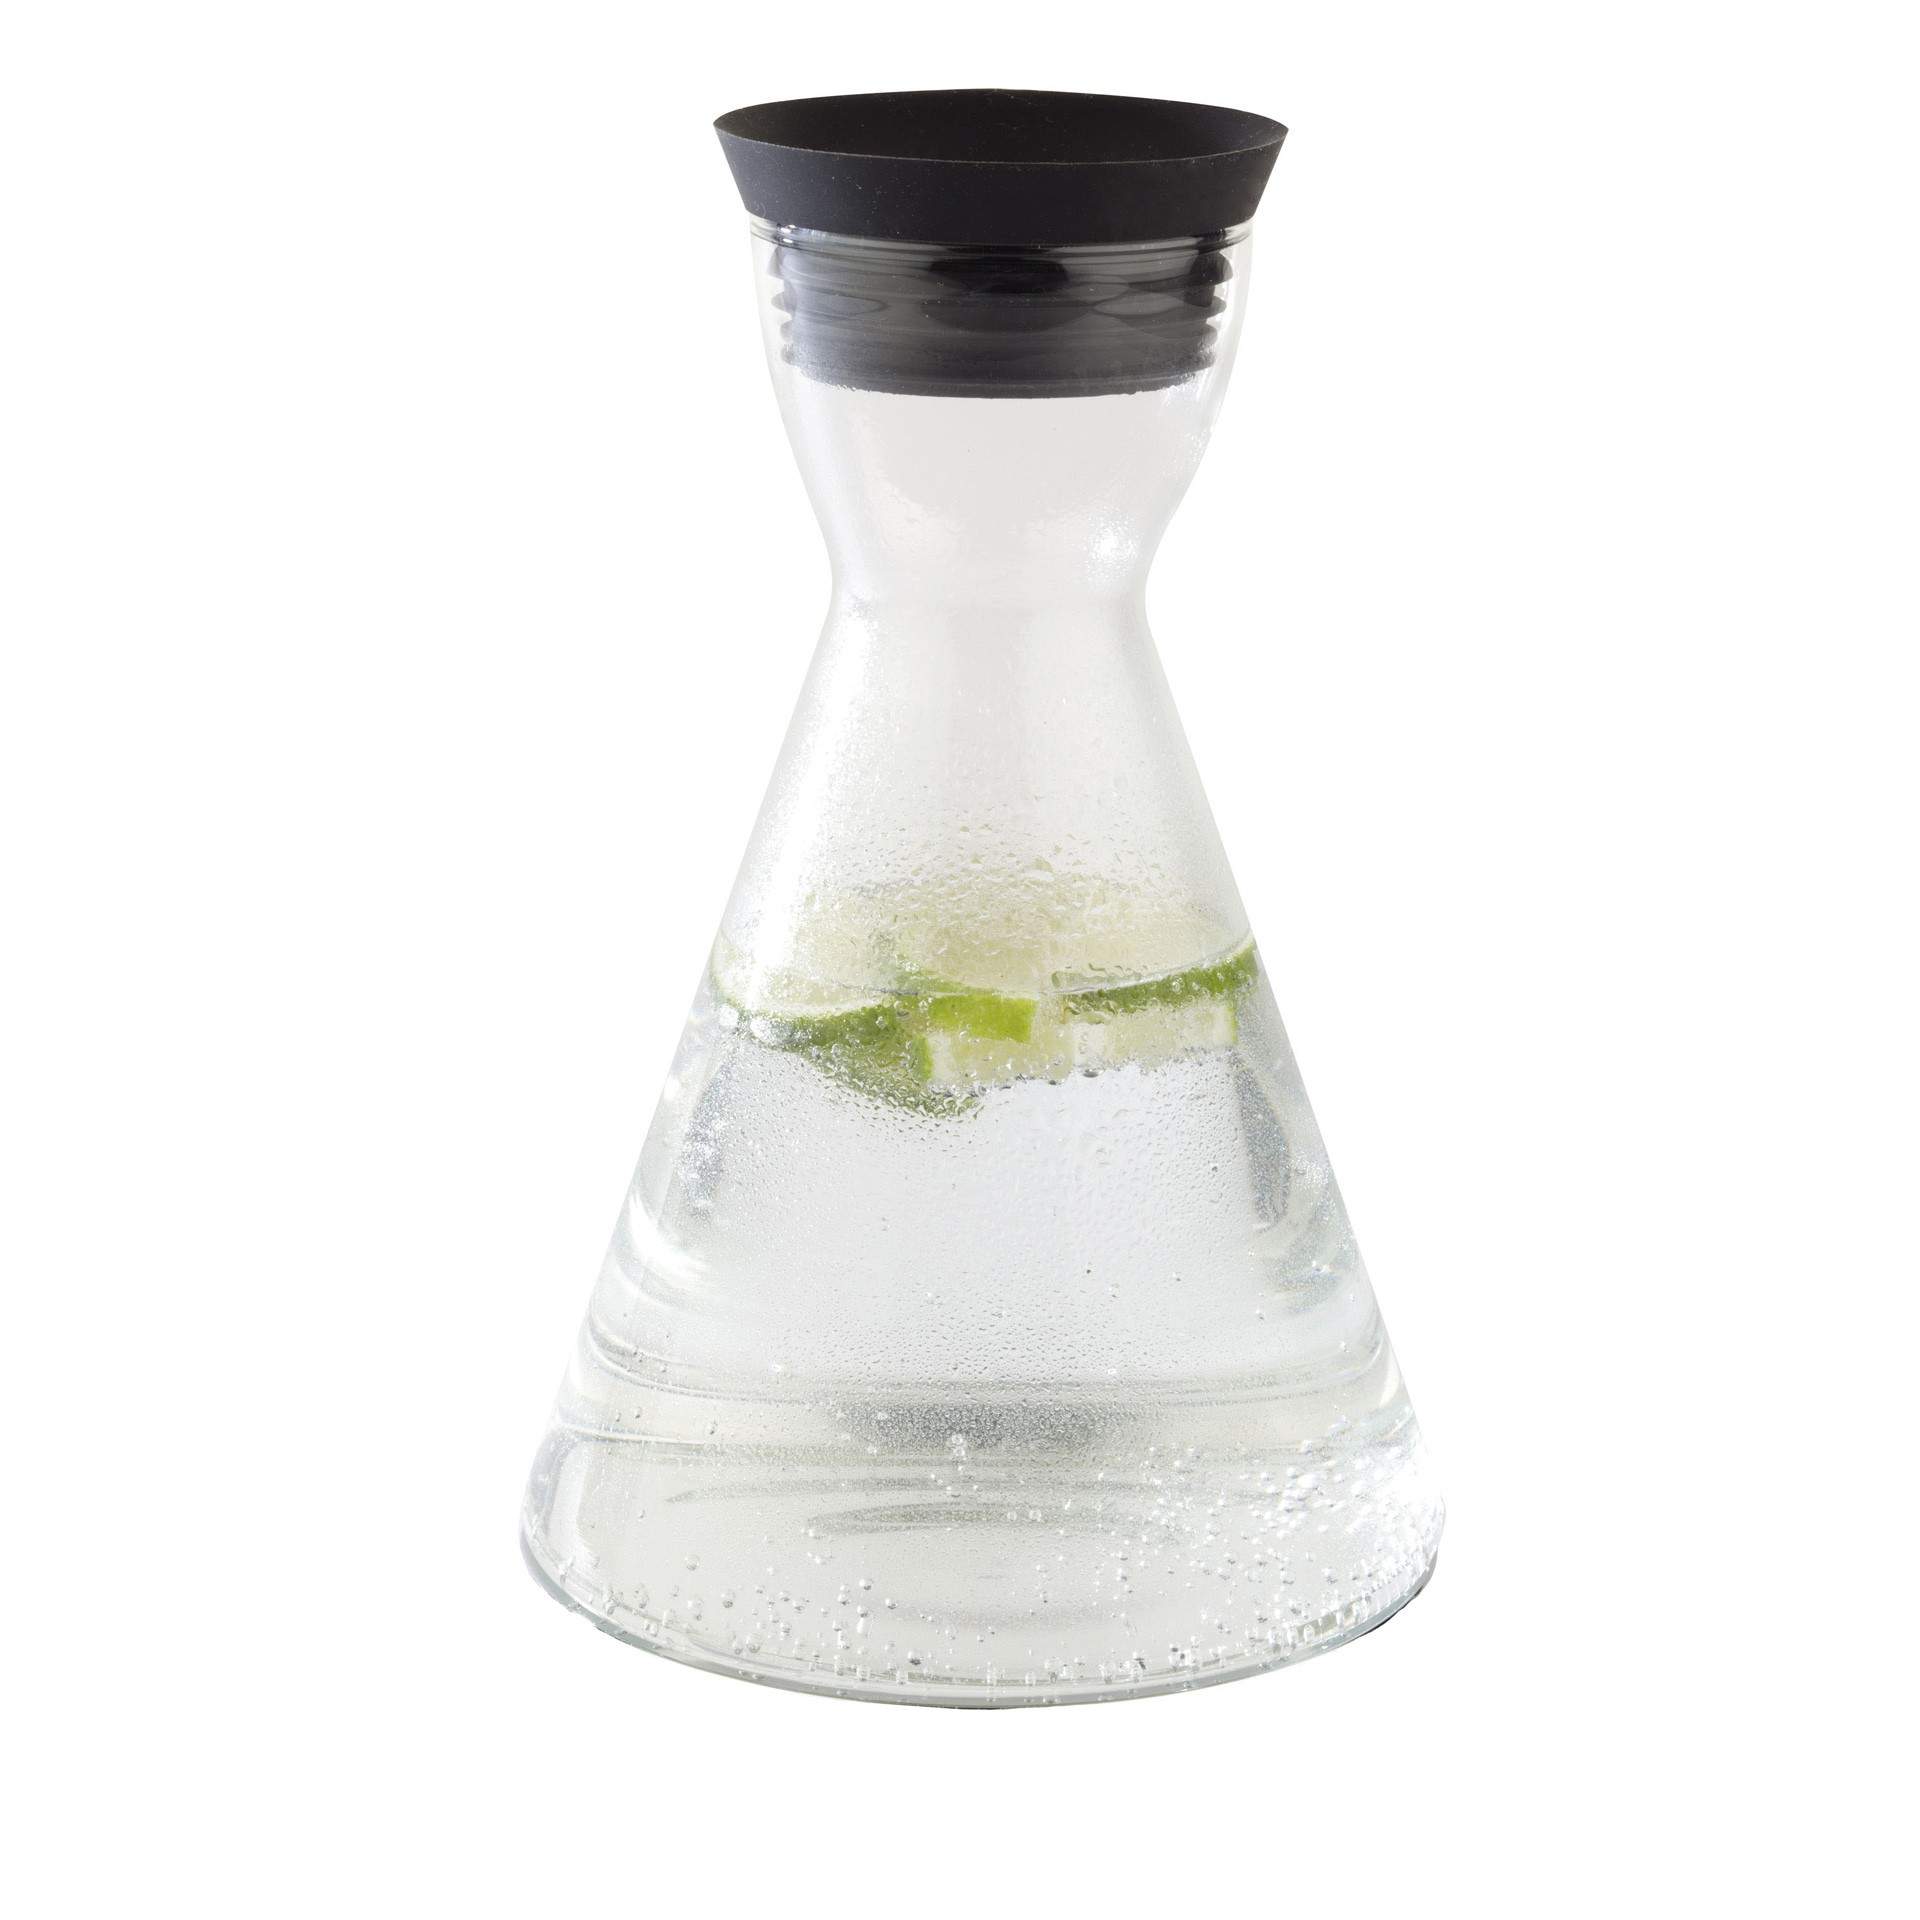 Glaskaraffe - mit Ausgießer - transparent - Abm. 26 cm - Ø 16 cm - Inhalt 1,4 l - Glas - 10761-B